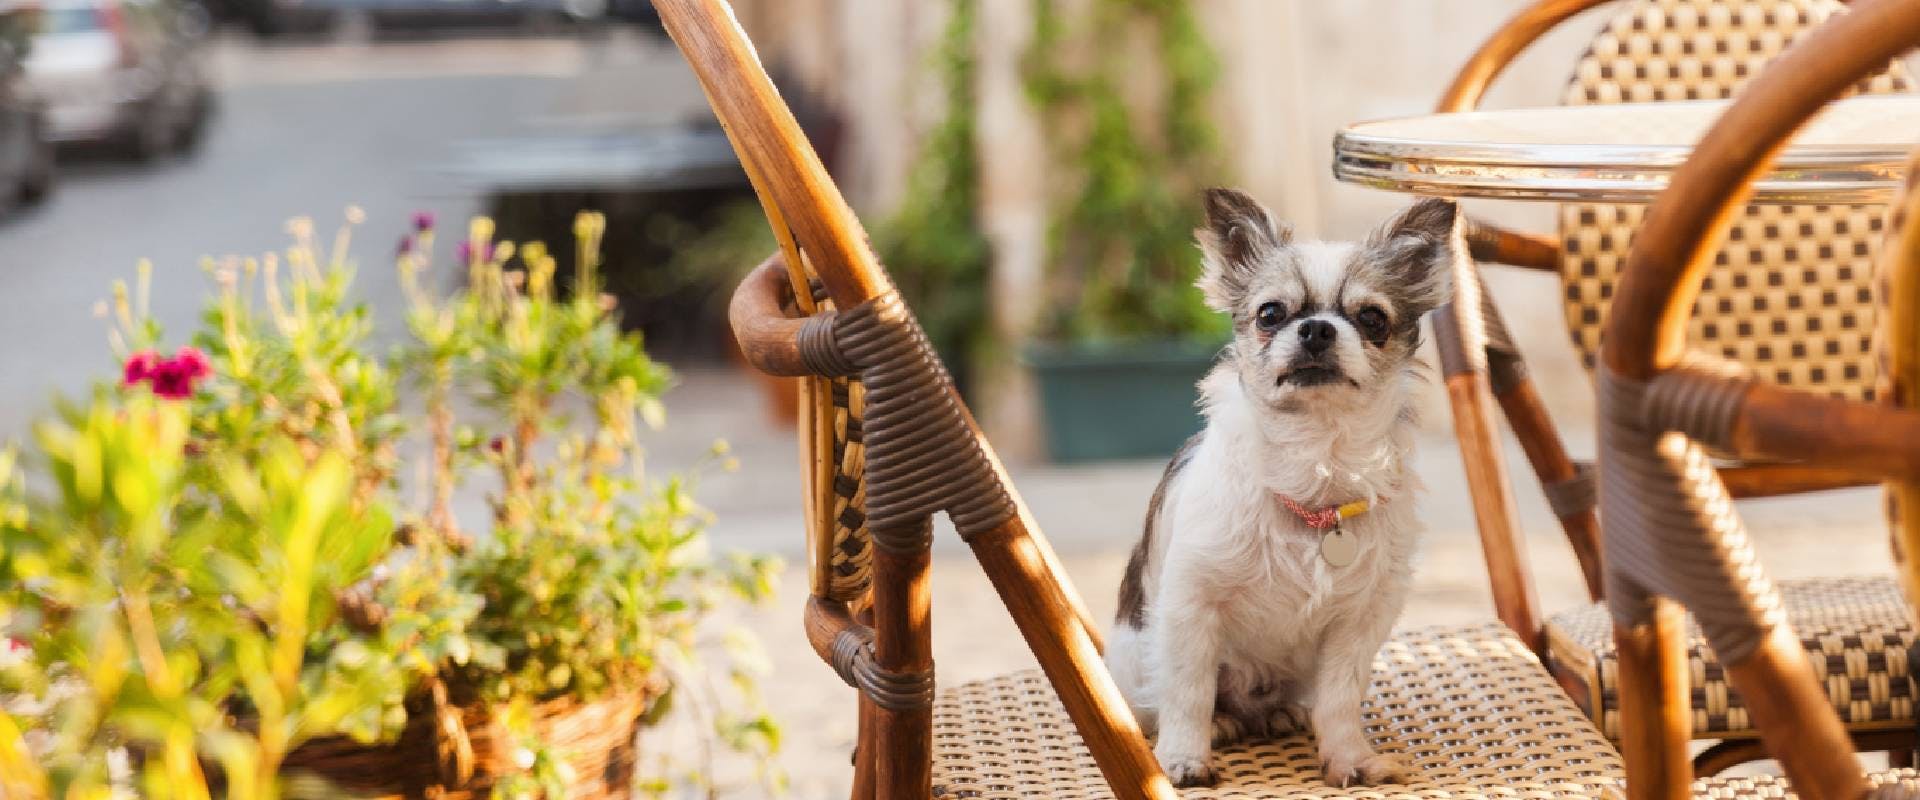 Chihuahua sat in a dog-friendly bar